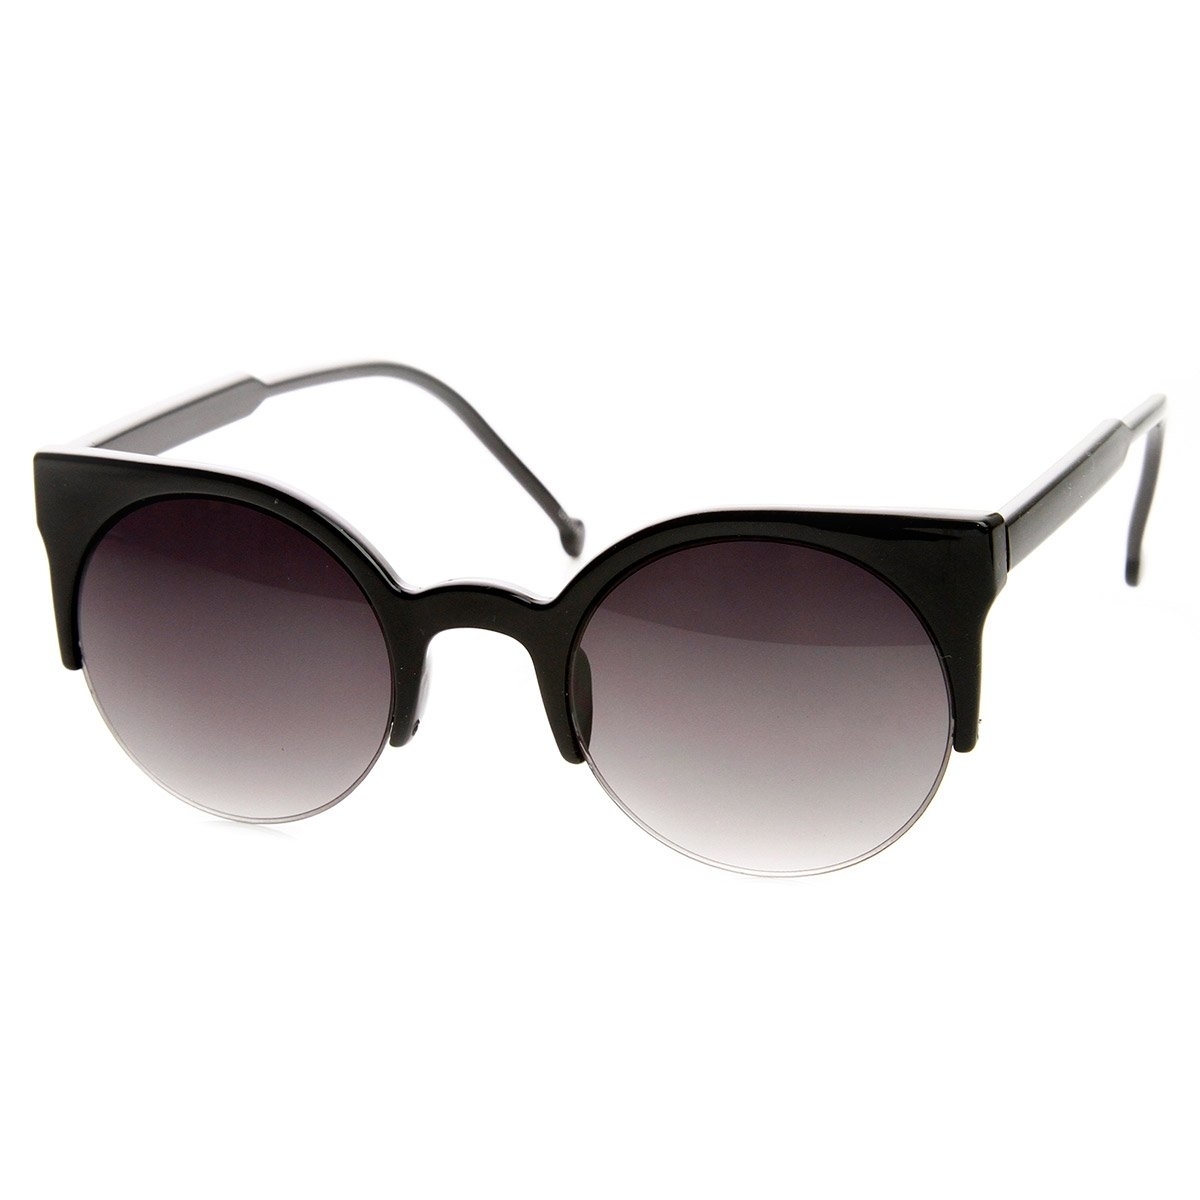 Womens Fashion Half Frame Round Cateye Sunglasses - image 2 of 6